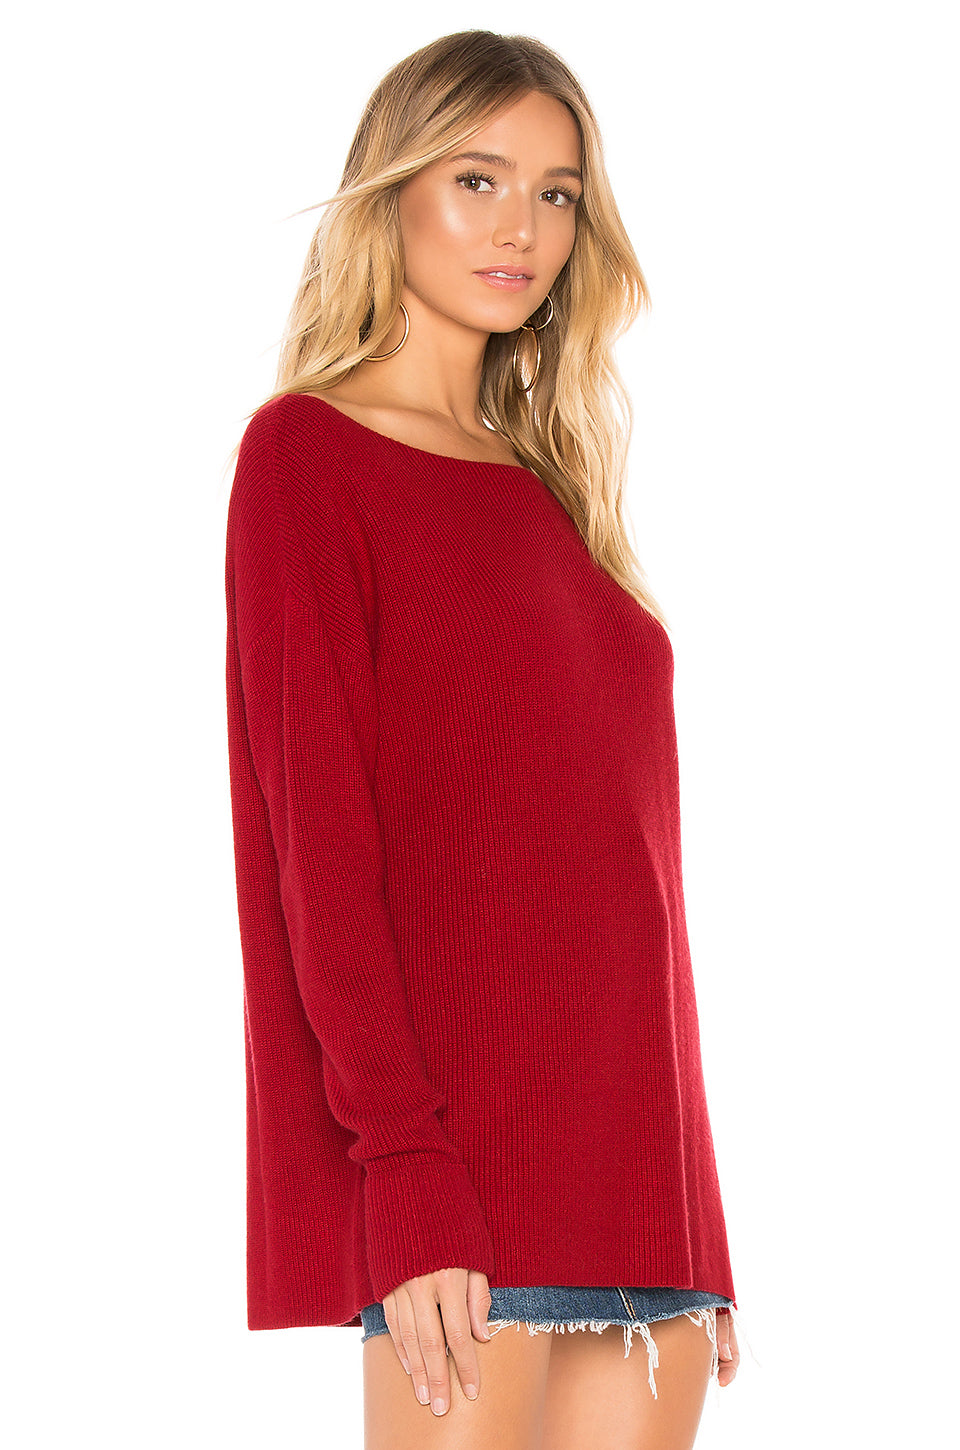 Cali Sweater in RED